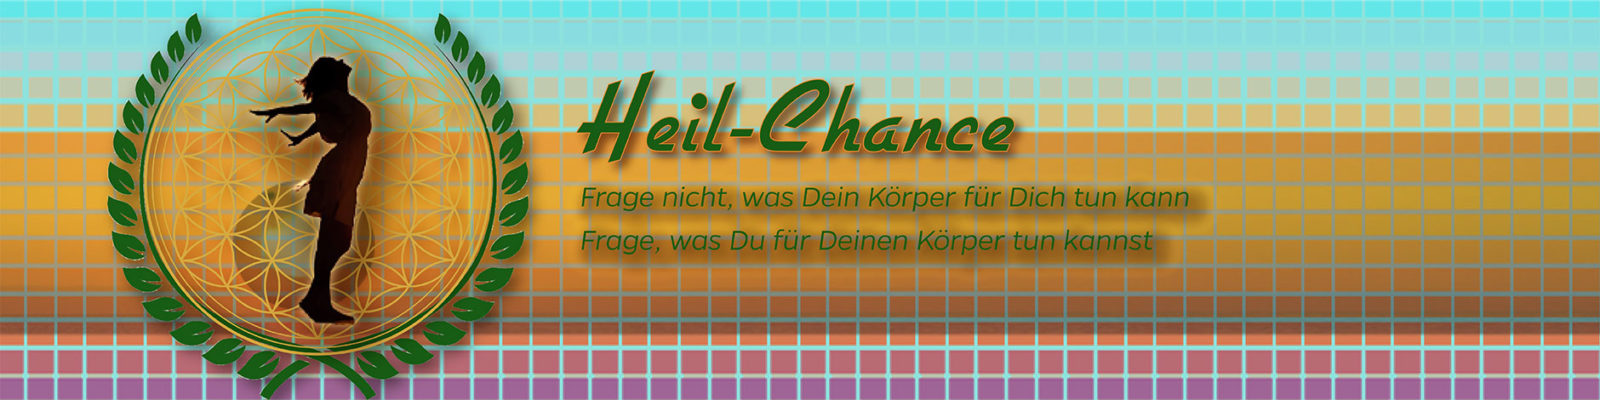 Heil-Chance